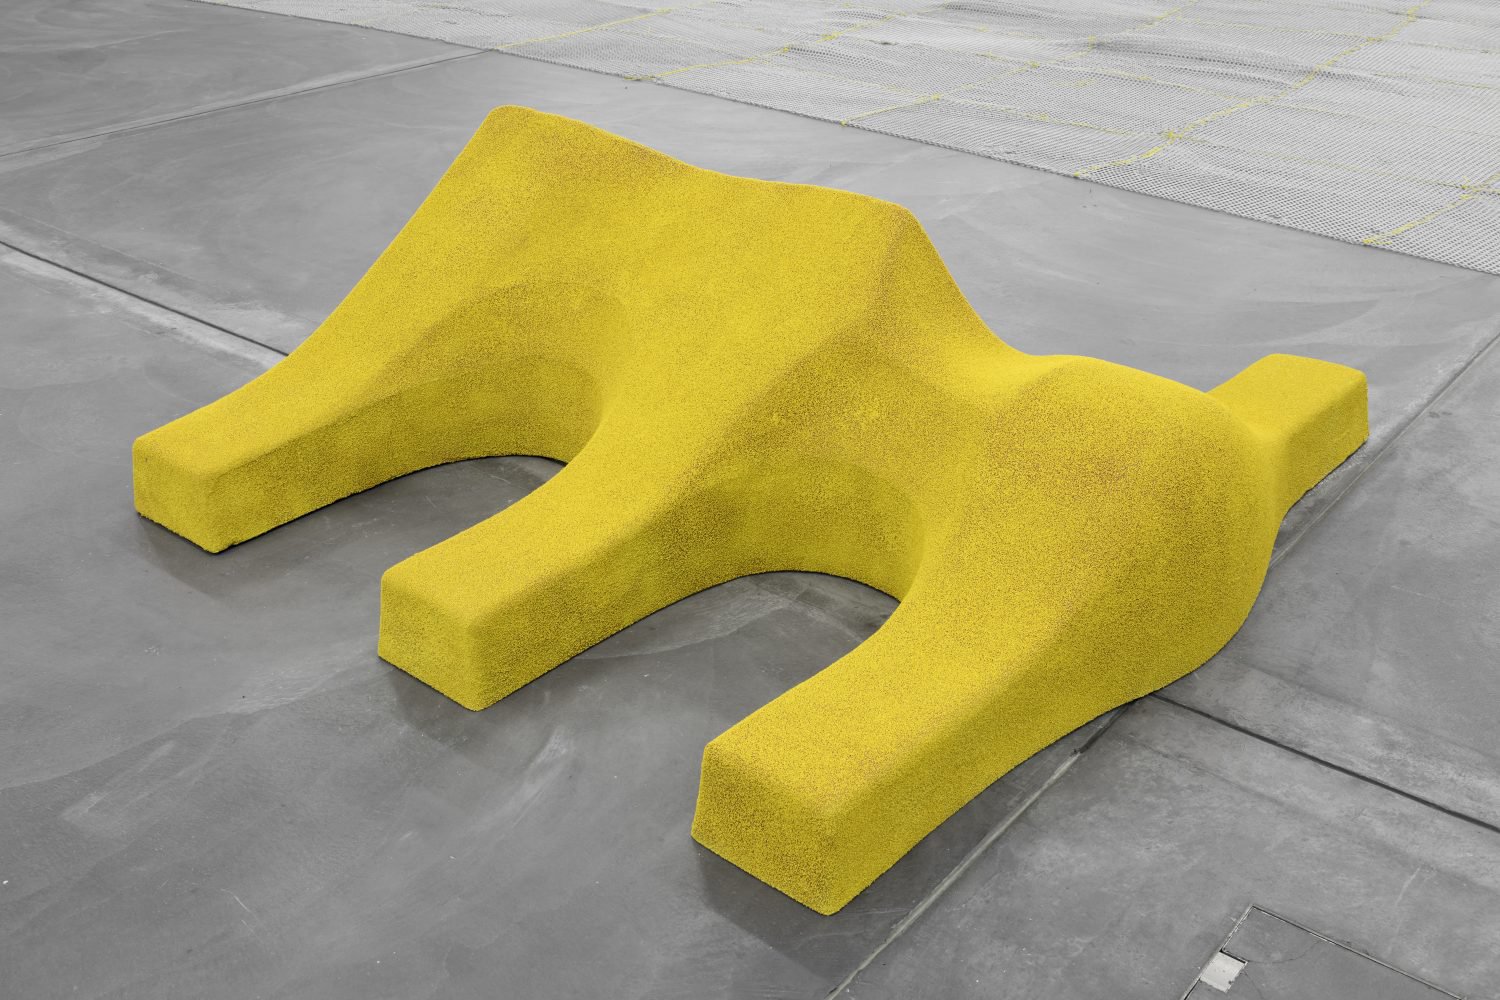 Lena HenkeAldo Rossi’s Sleeping Elephant, 2018Plaster, fiberglass, rubber, paint70 x 220 x 225 cm